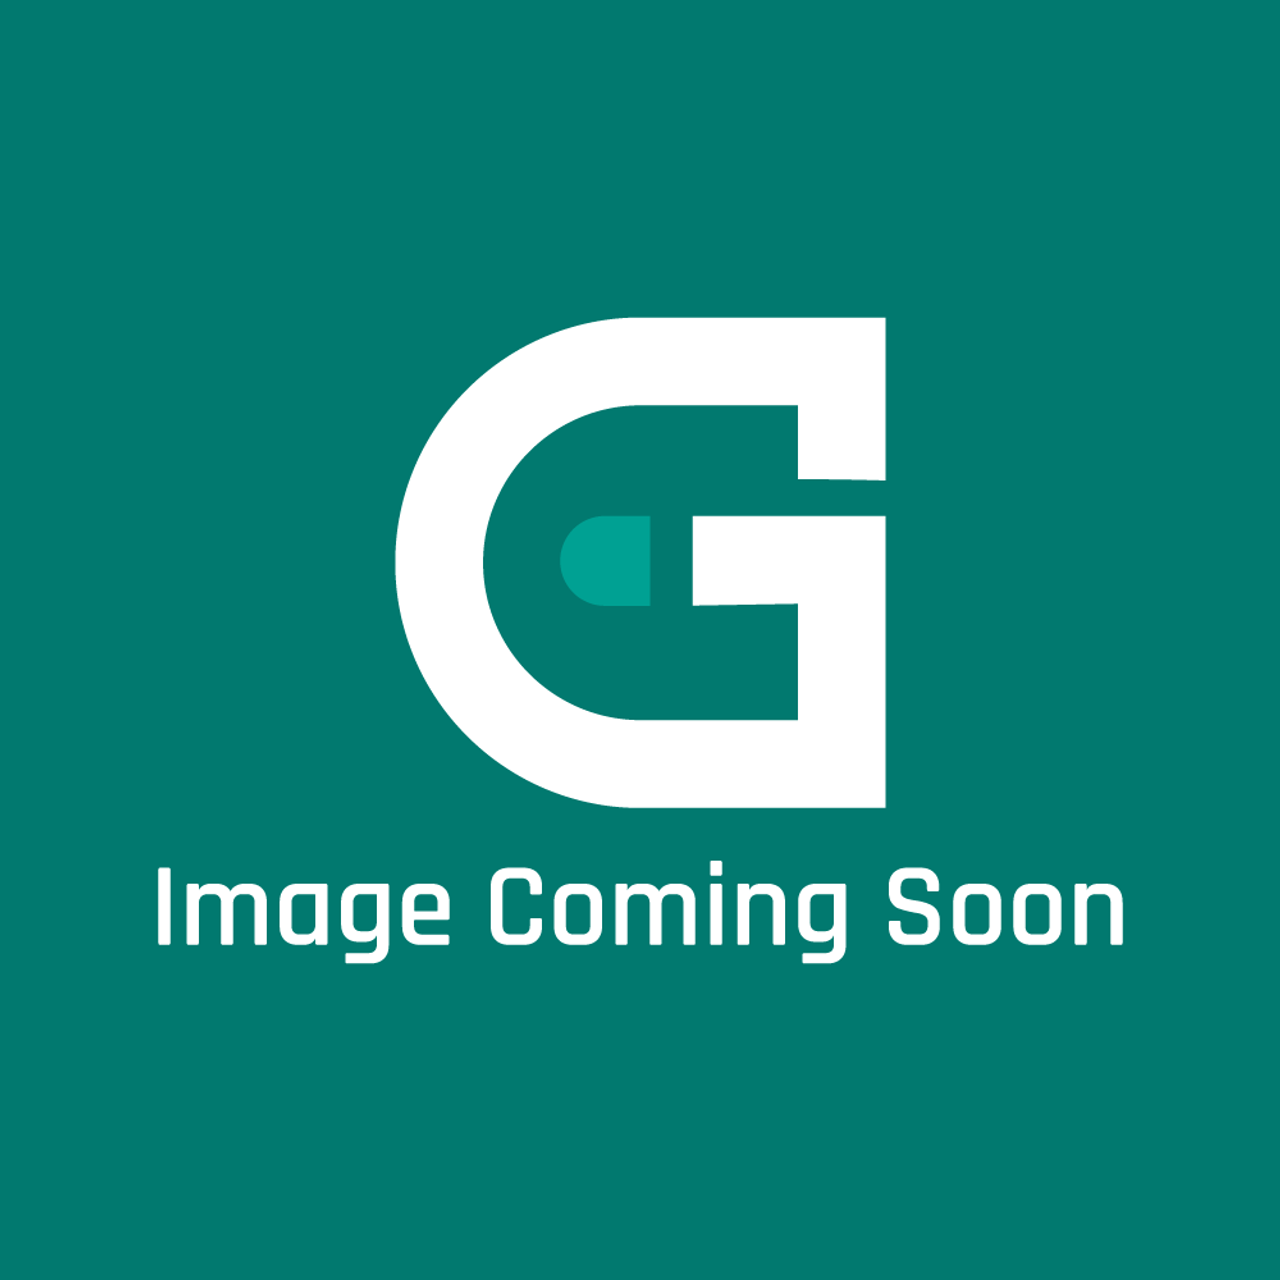 Frigidaire - Electrolux 318396319 Lp Conversion Kit - Image Coming Soon!